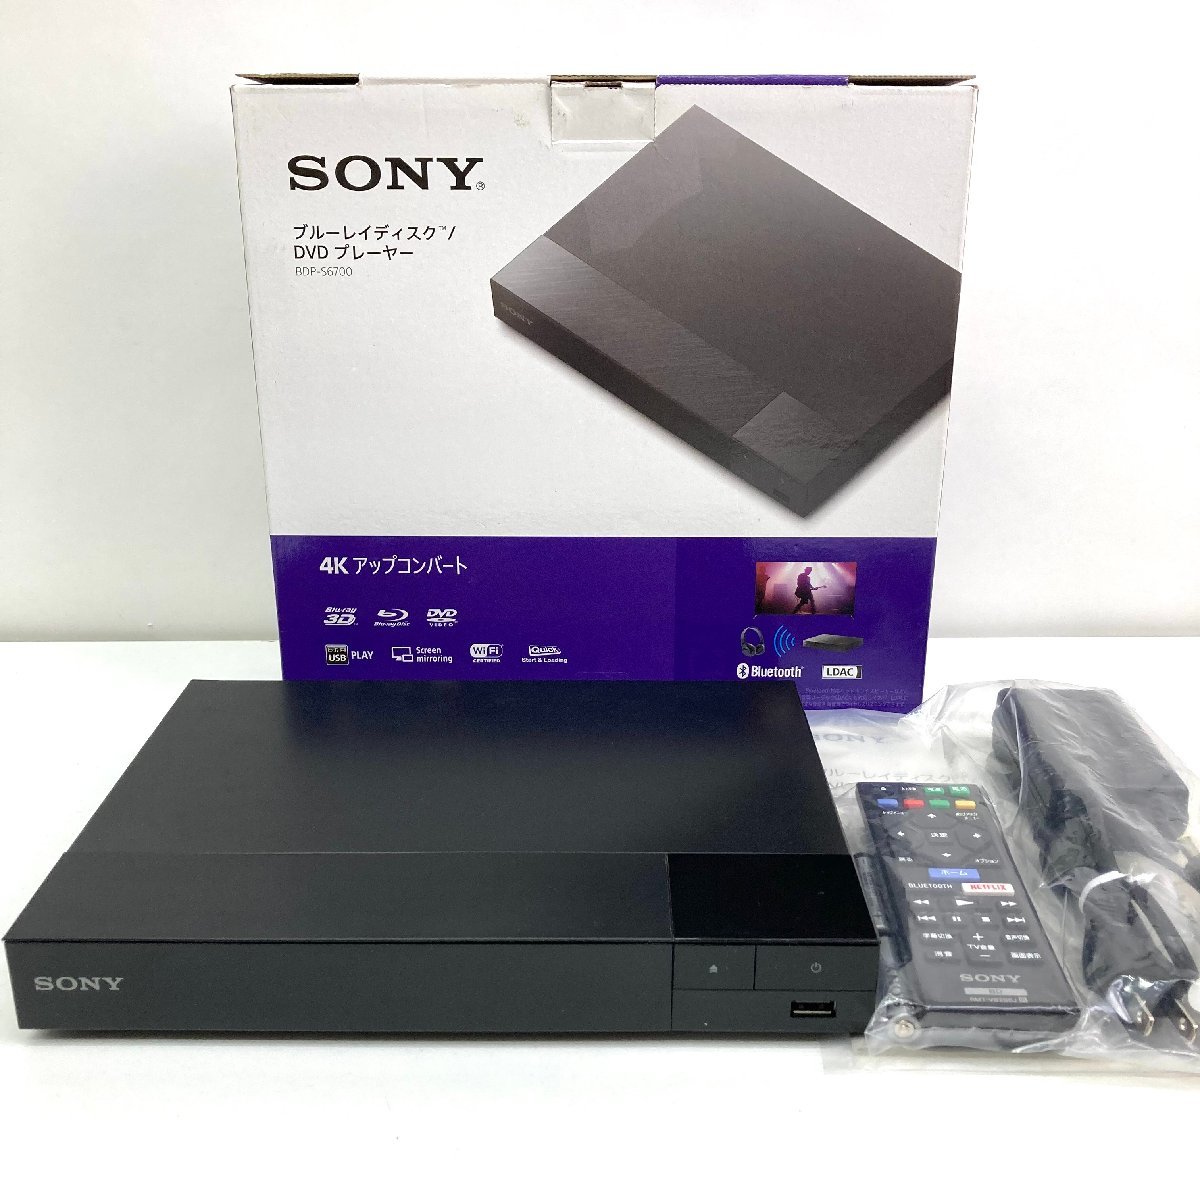 SONY リージョンフリーBD/DVDプレーヤー (日本語バージョン) BDP-S3700 並行輸入品